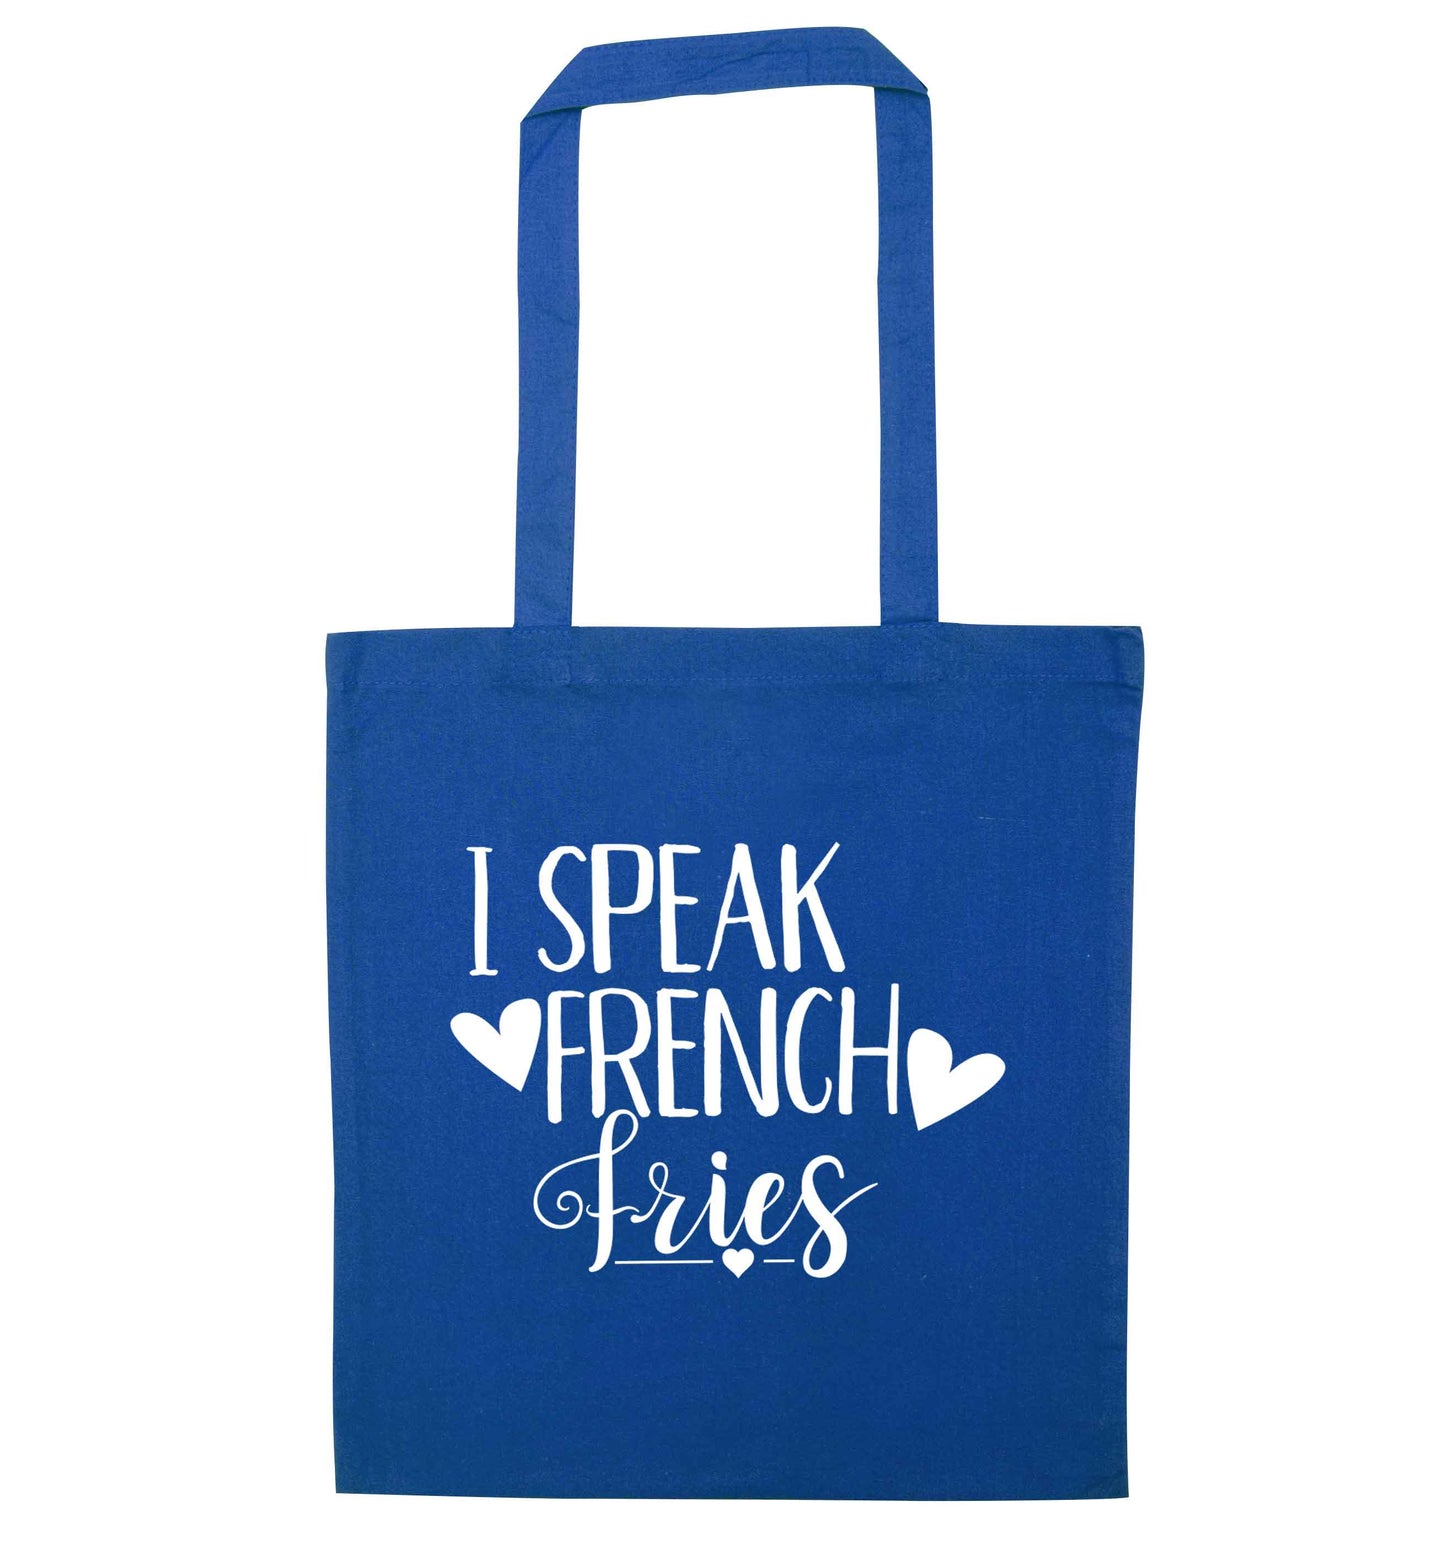 I speak French fries blue tote bag